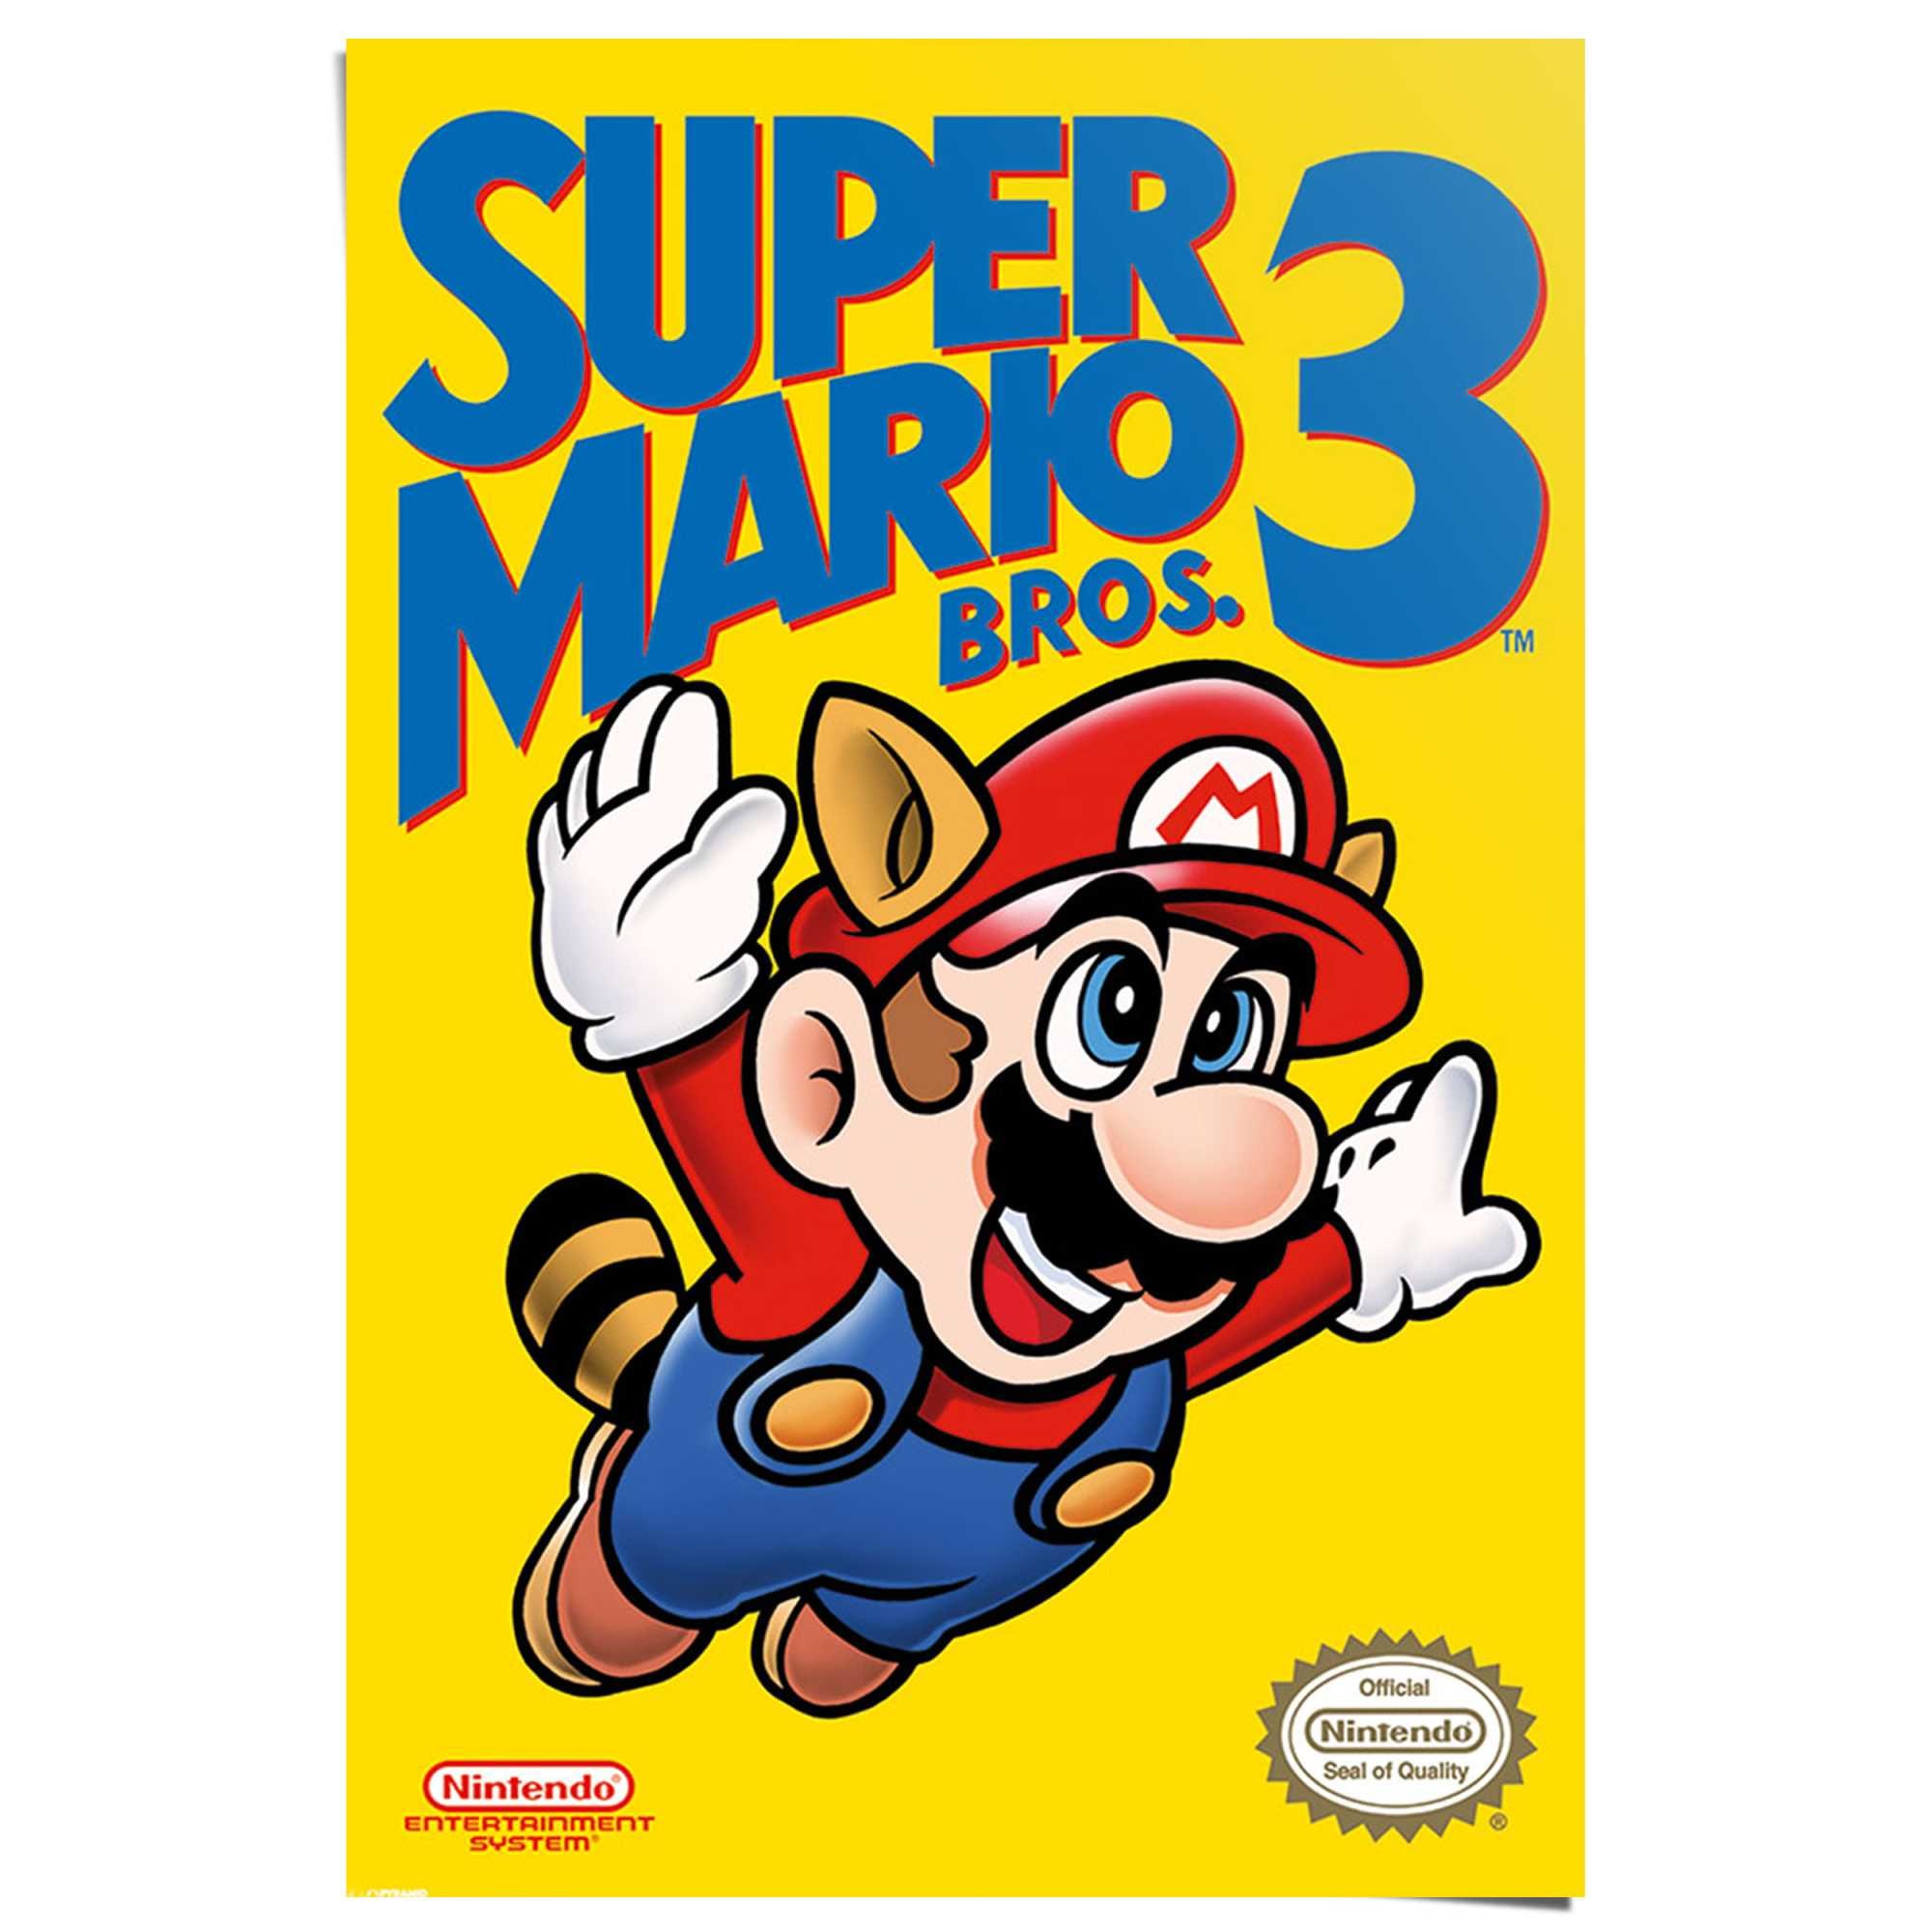 Poster »Super Mario Bros 3 - NES cover«